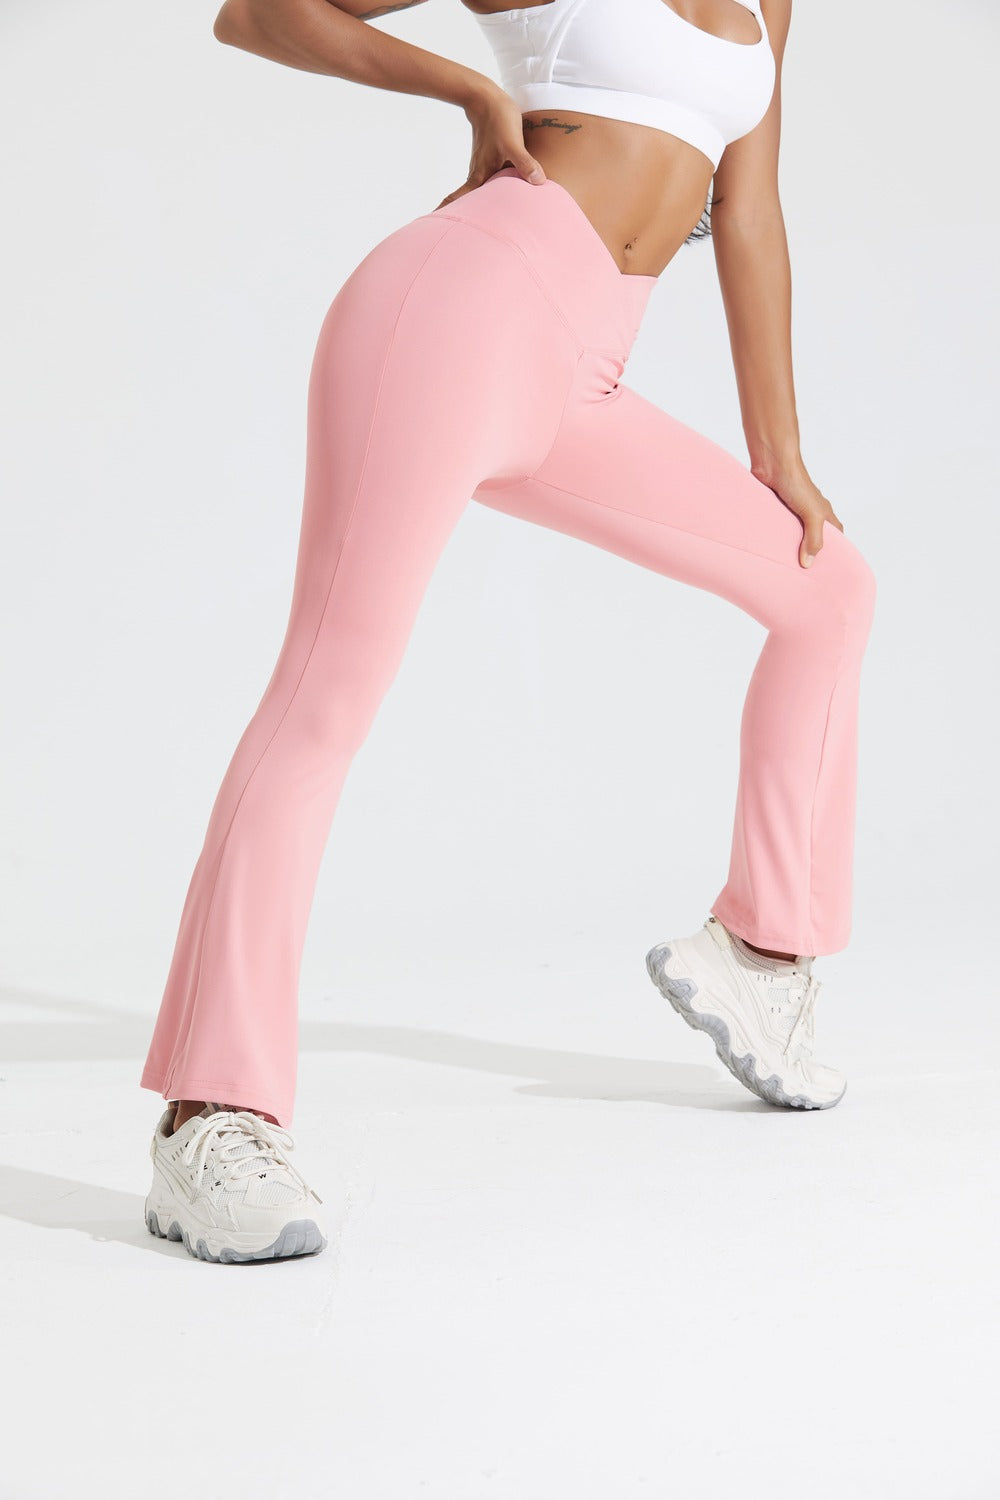 eczipvz Fleece Lined Leggings Women's Flare Leggings, Trendy Crossover Yoga  Pants, High Waist Casual Workout Bell Bottom Leggings with Pockets M,Pink 